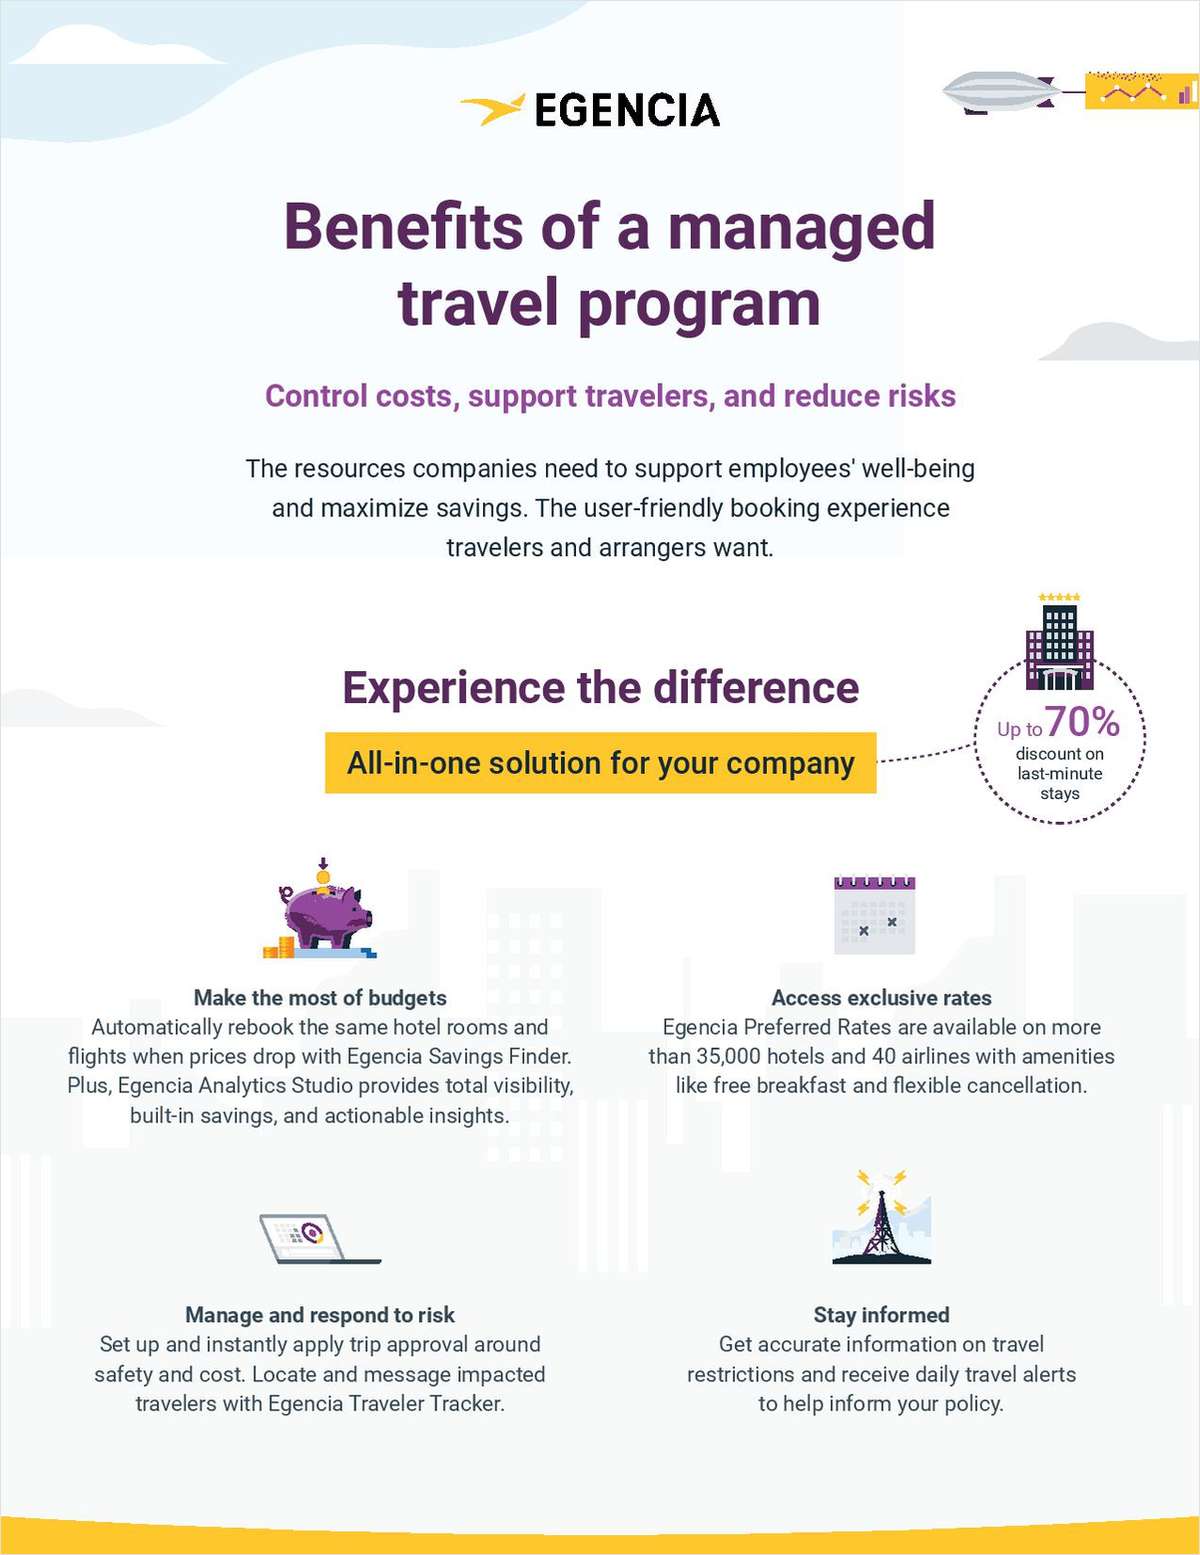 Benefits of a Managed Travel Program